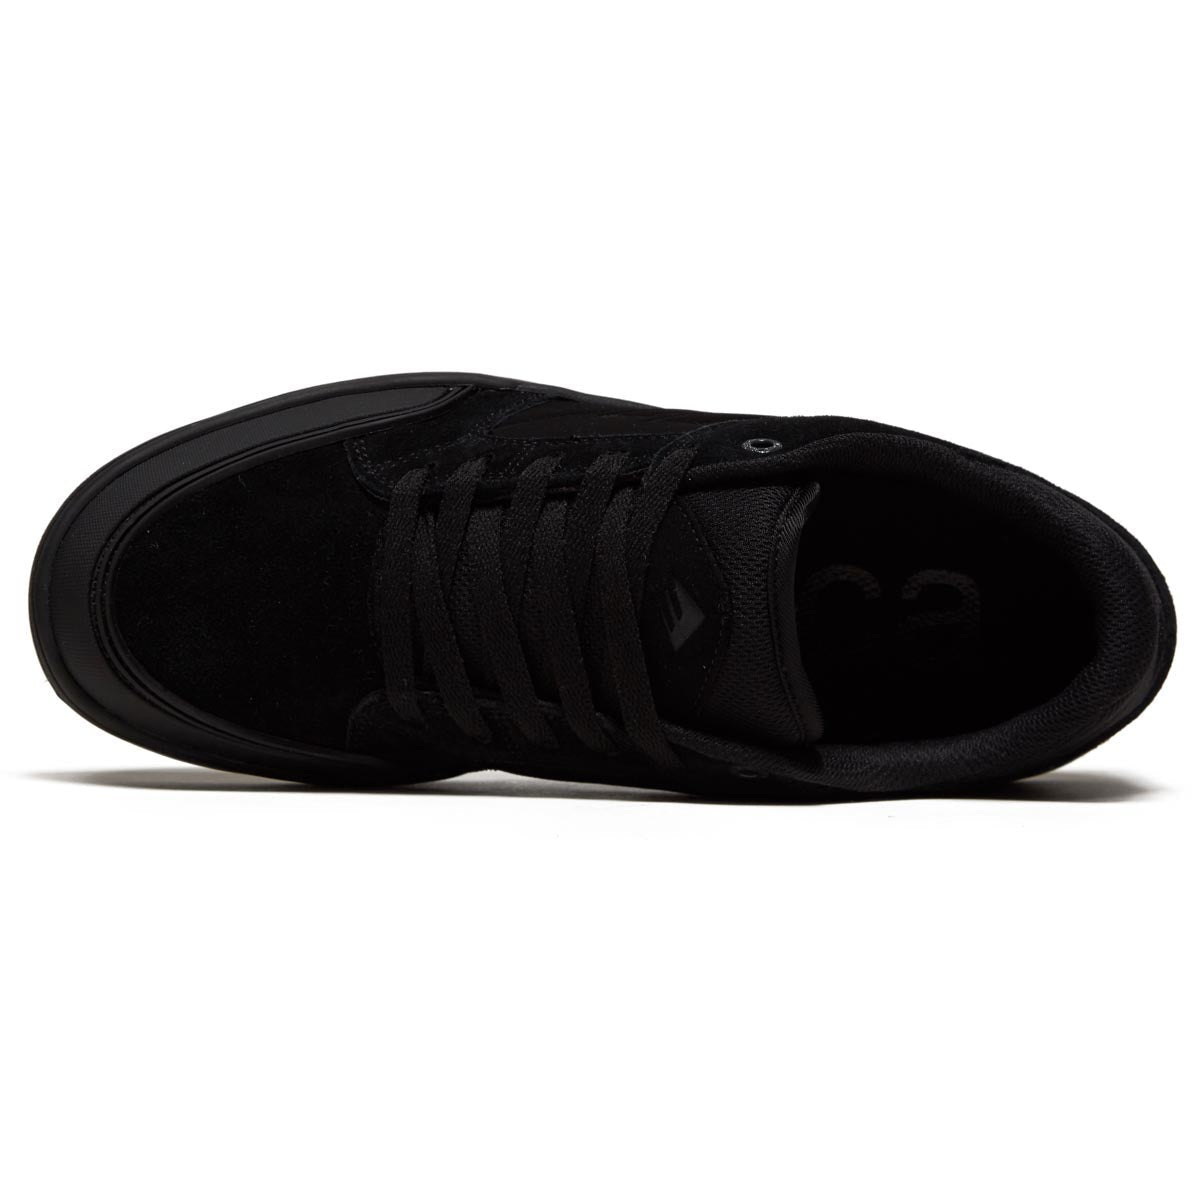 Emerica Heritic Shoes - Black/Black image 3